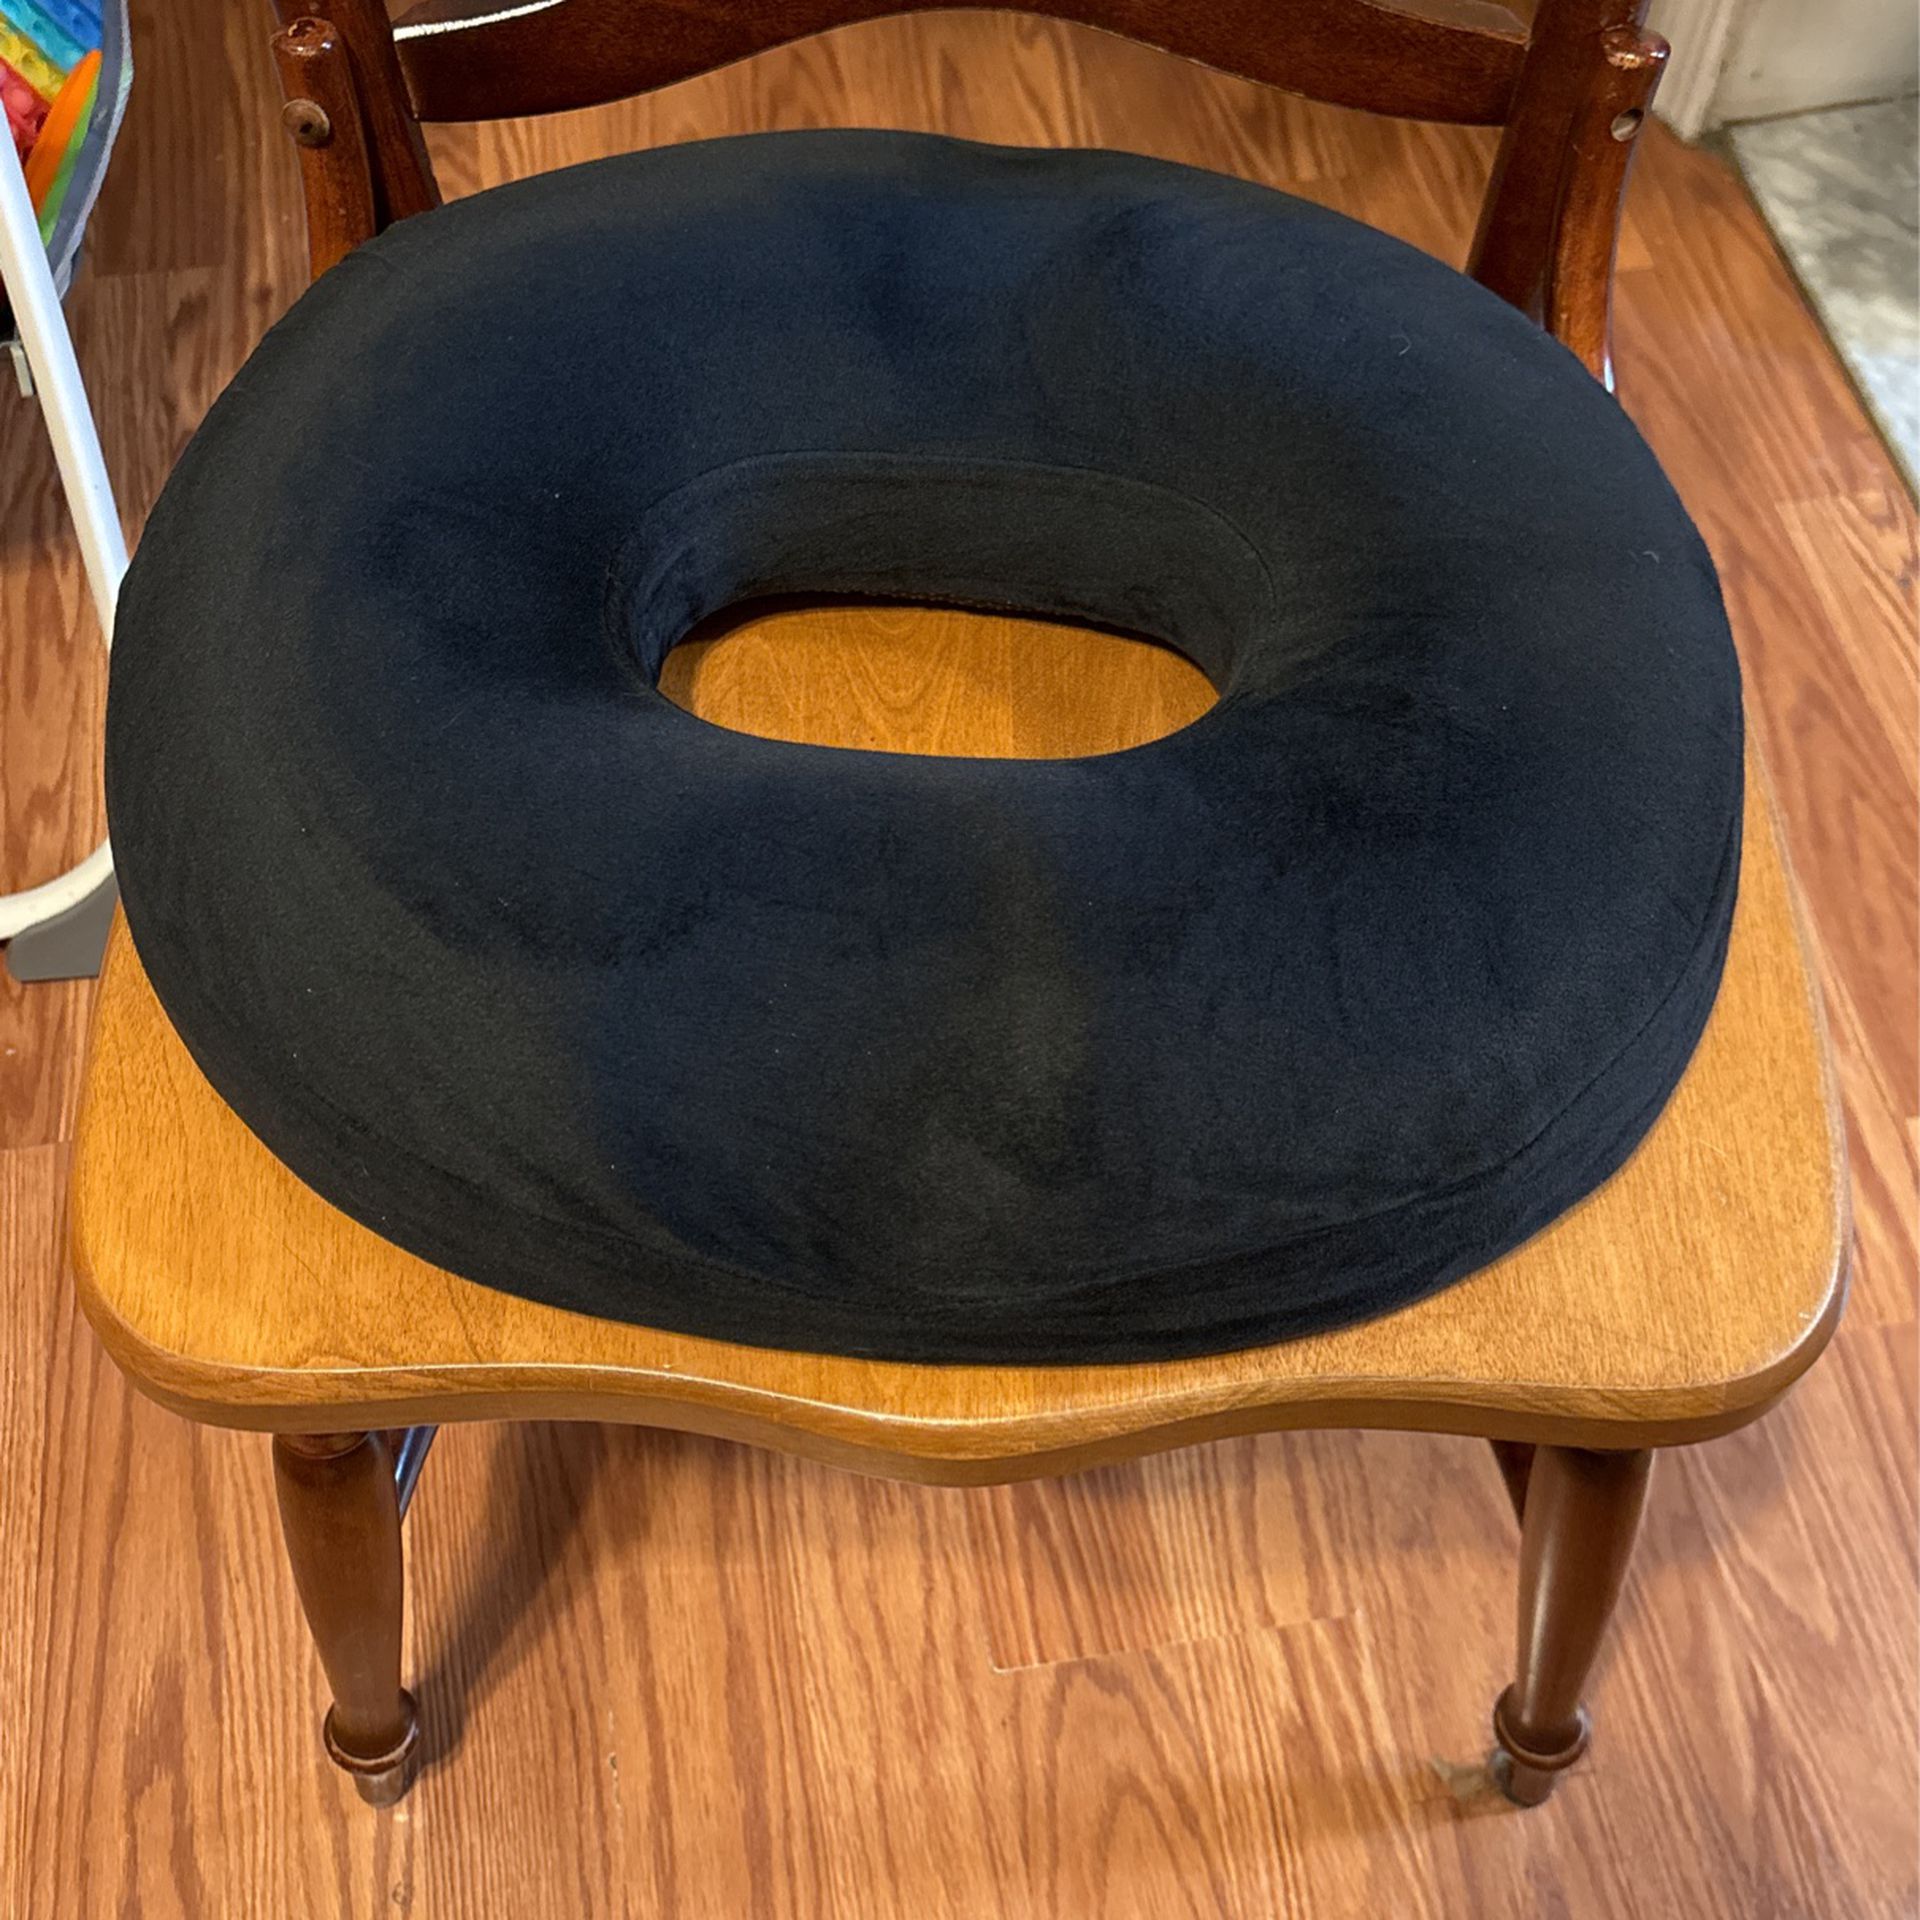 Donut Pillow Cushion